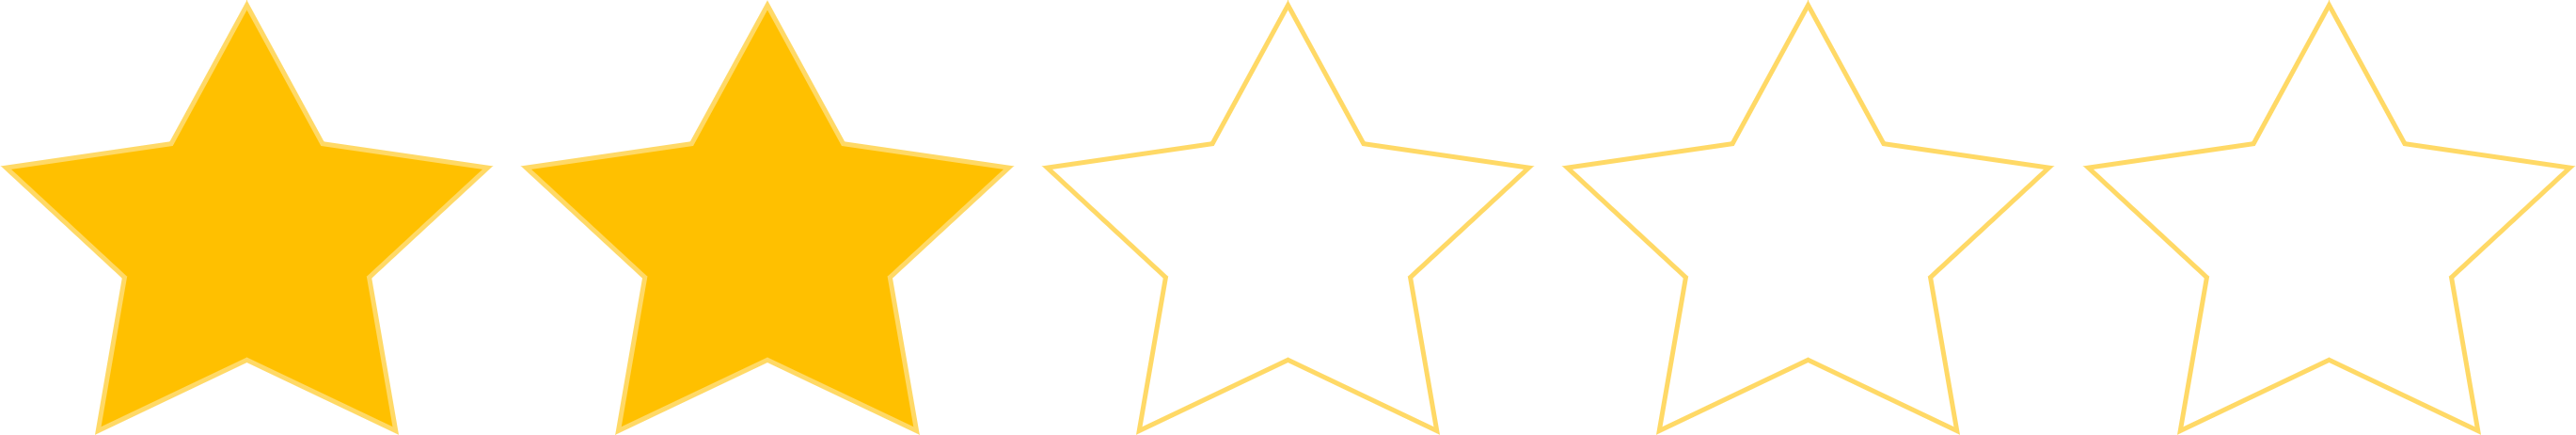 2 Star